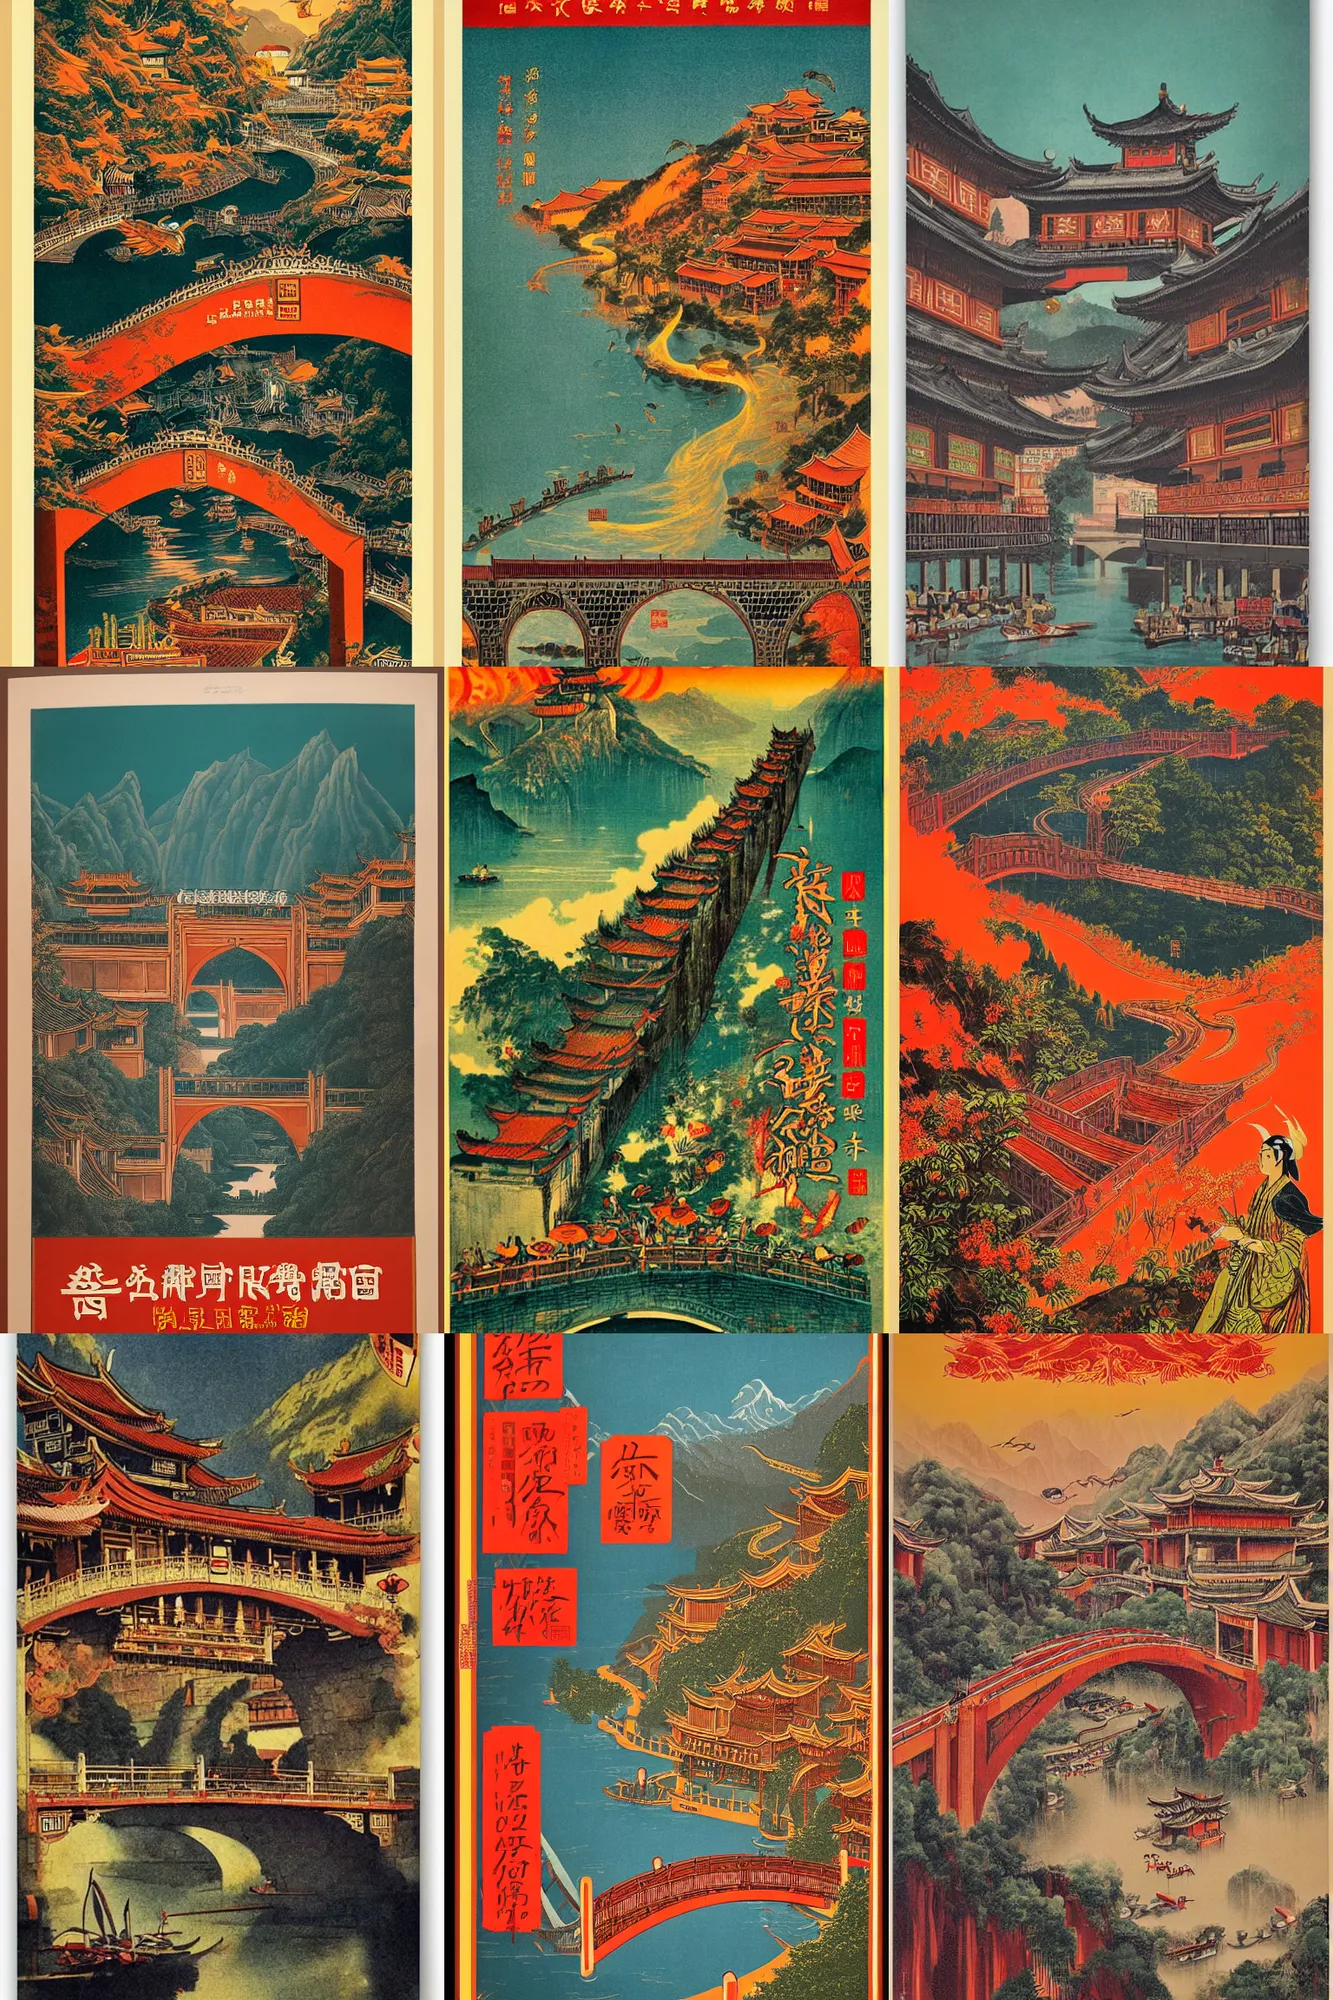 Prompt: Vintage travel poster for the Fenghuang Phoenix Hong Bridge by Daniel Adel